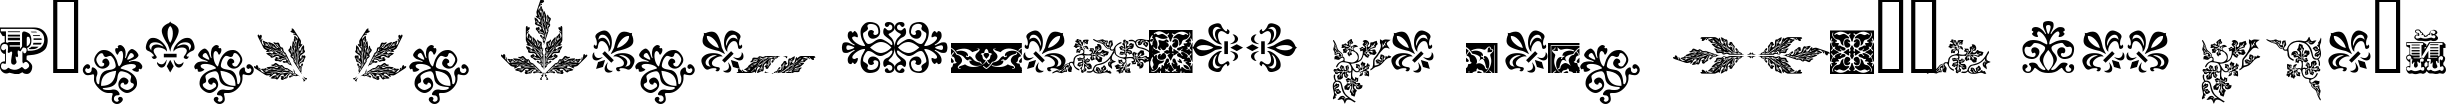 Пример написания шрифтом AsylbekM05.kz текста на французском